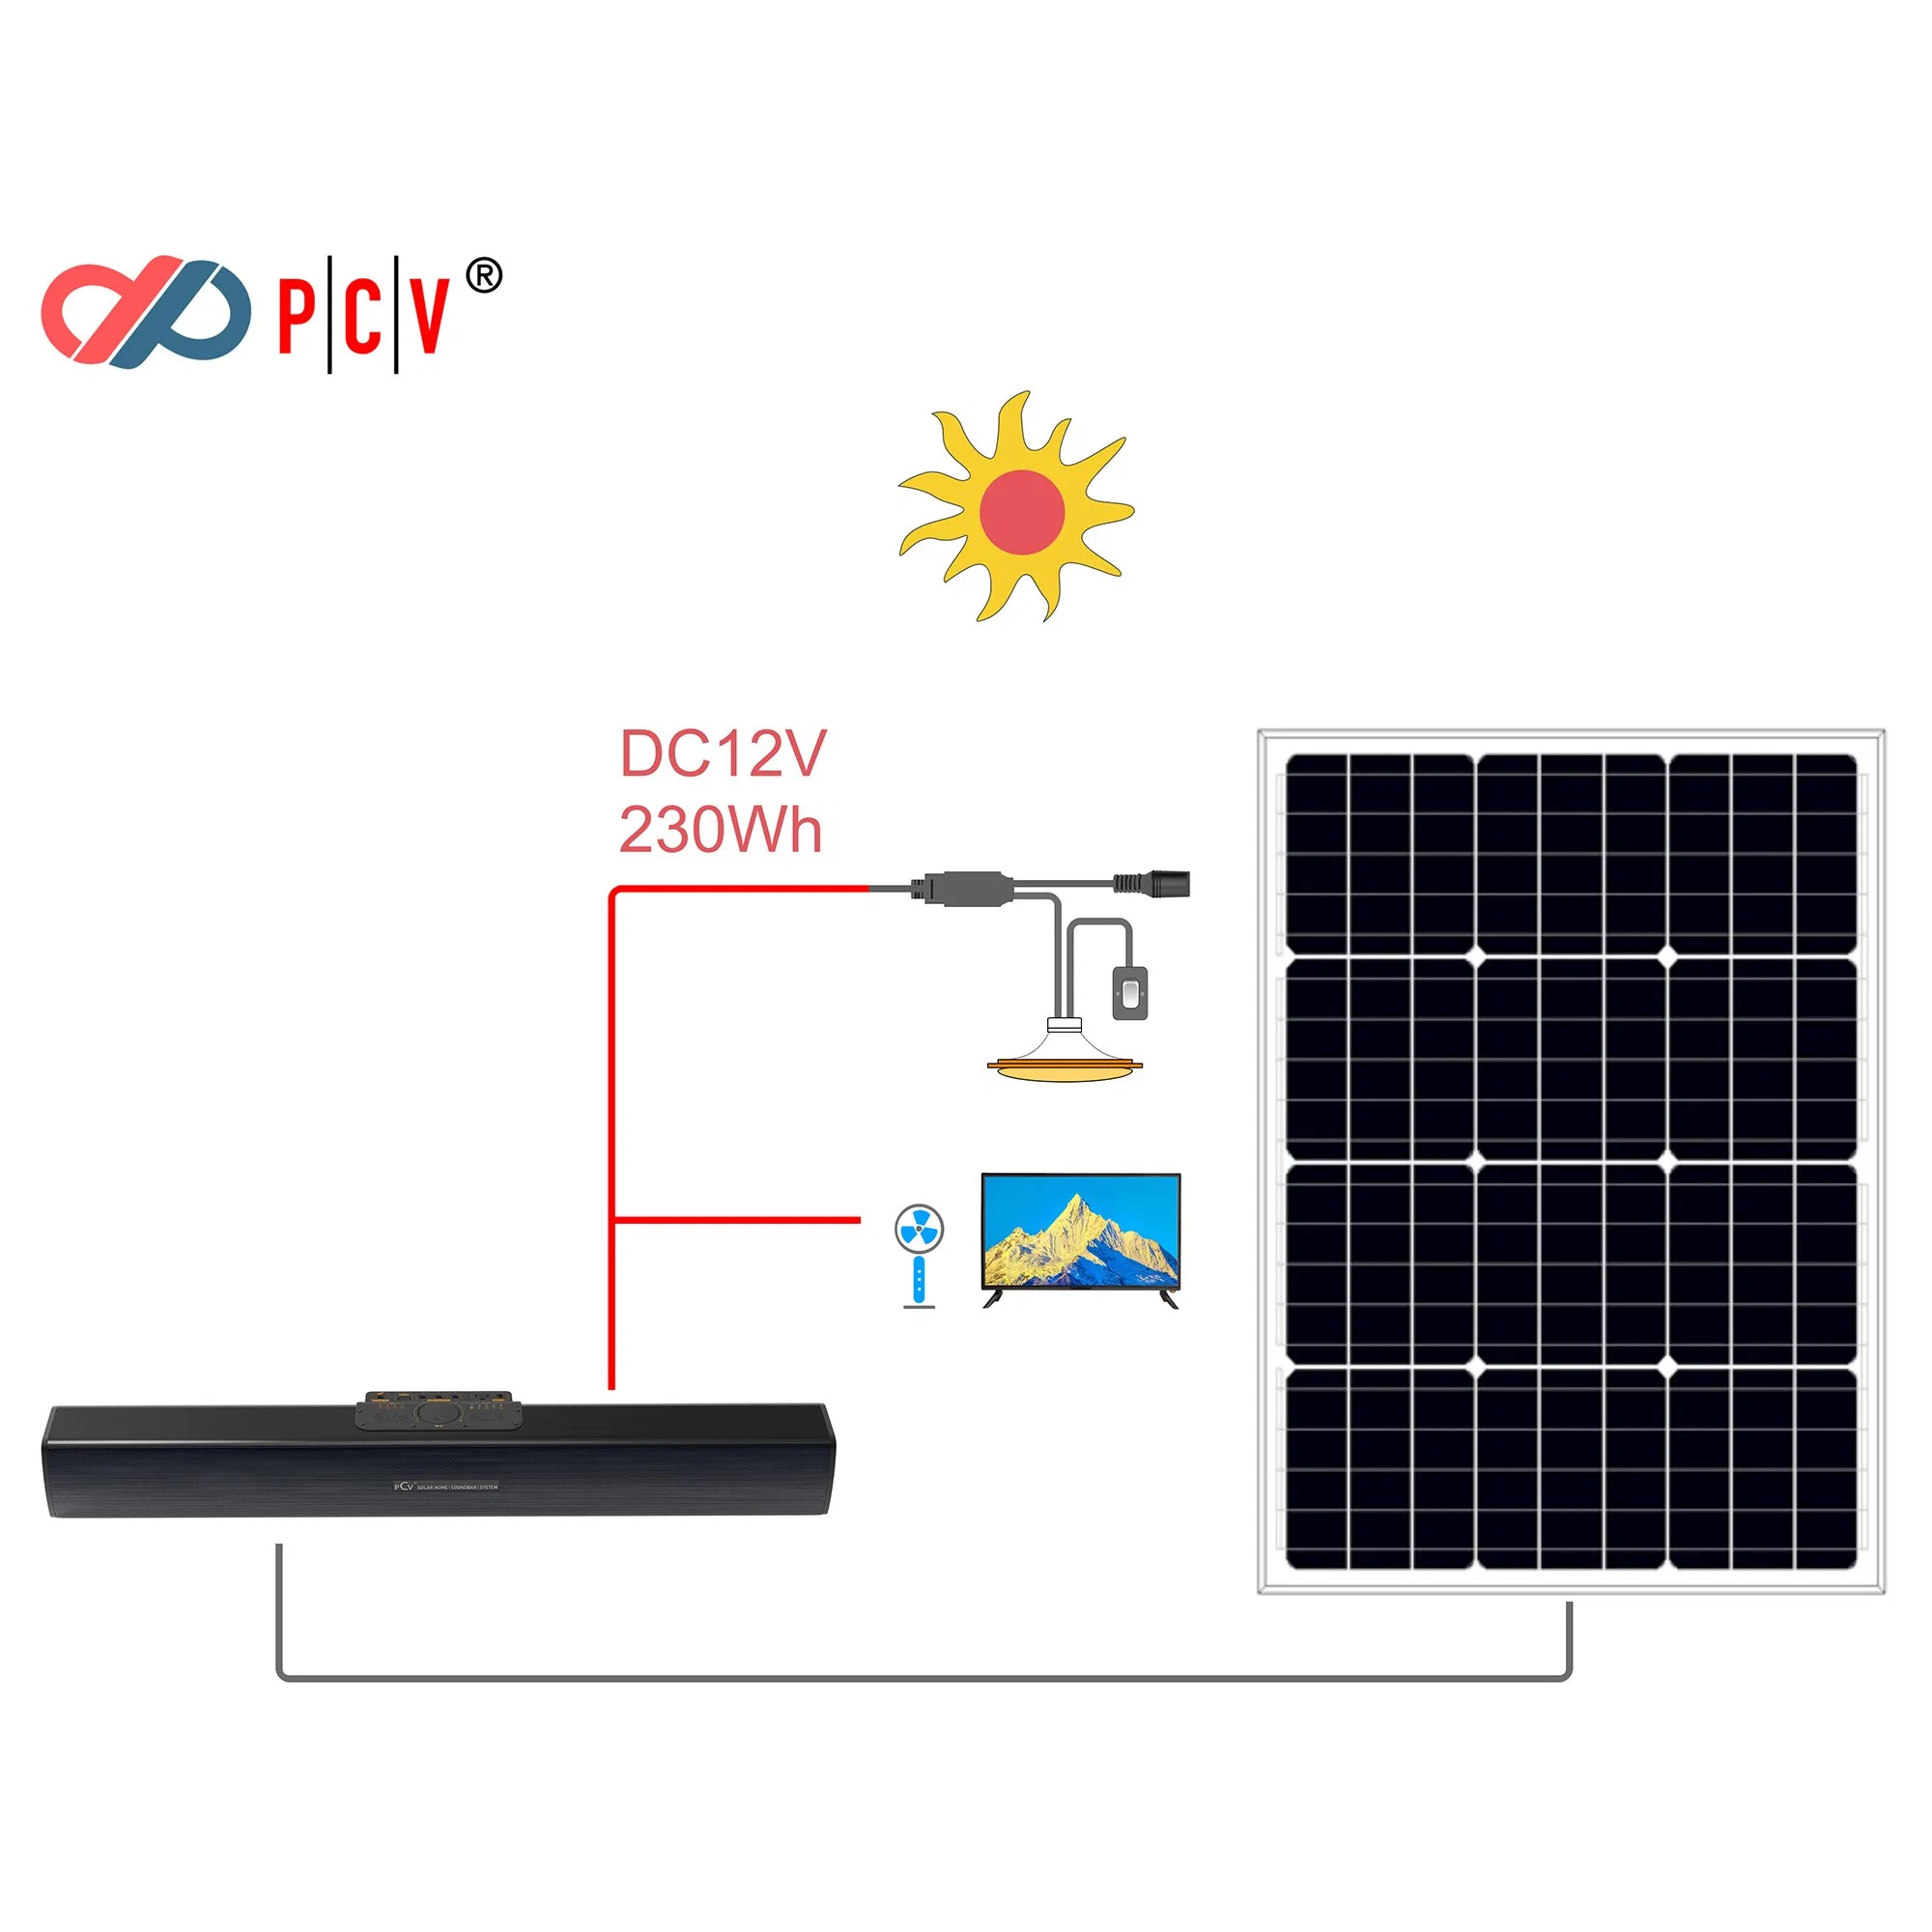 Pcv Solar Home Theatre System Solar Home Lighting System Solar Sound Bar + DC TV Portable for Outdoor